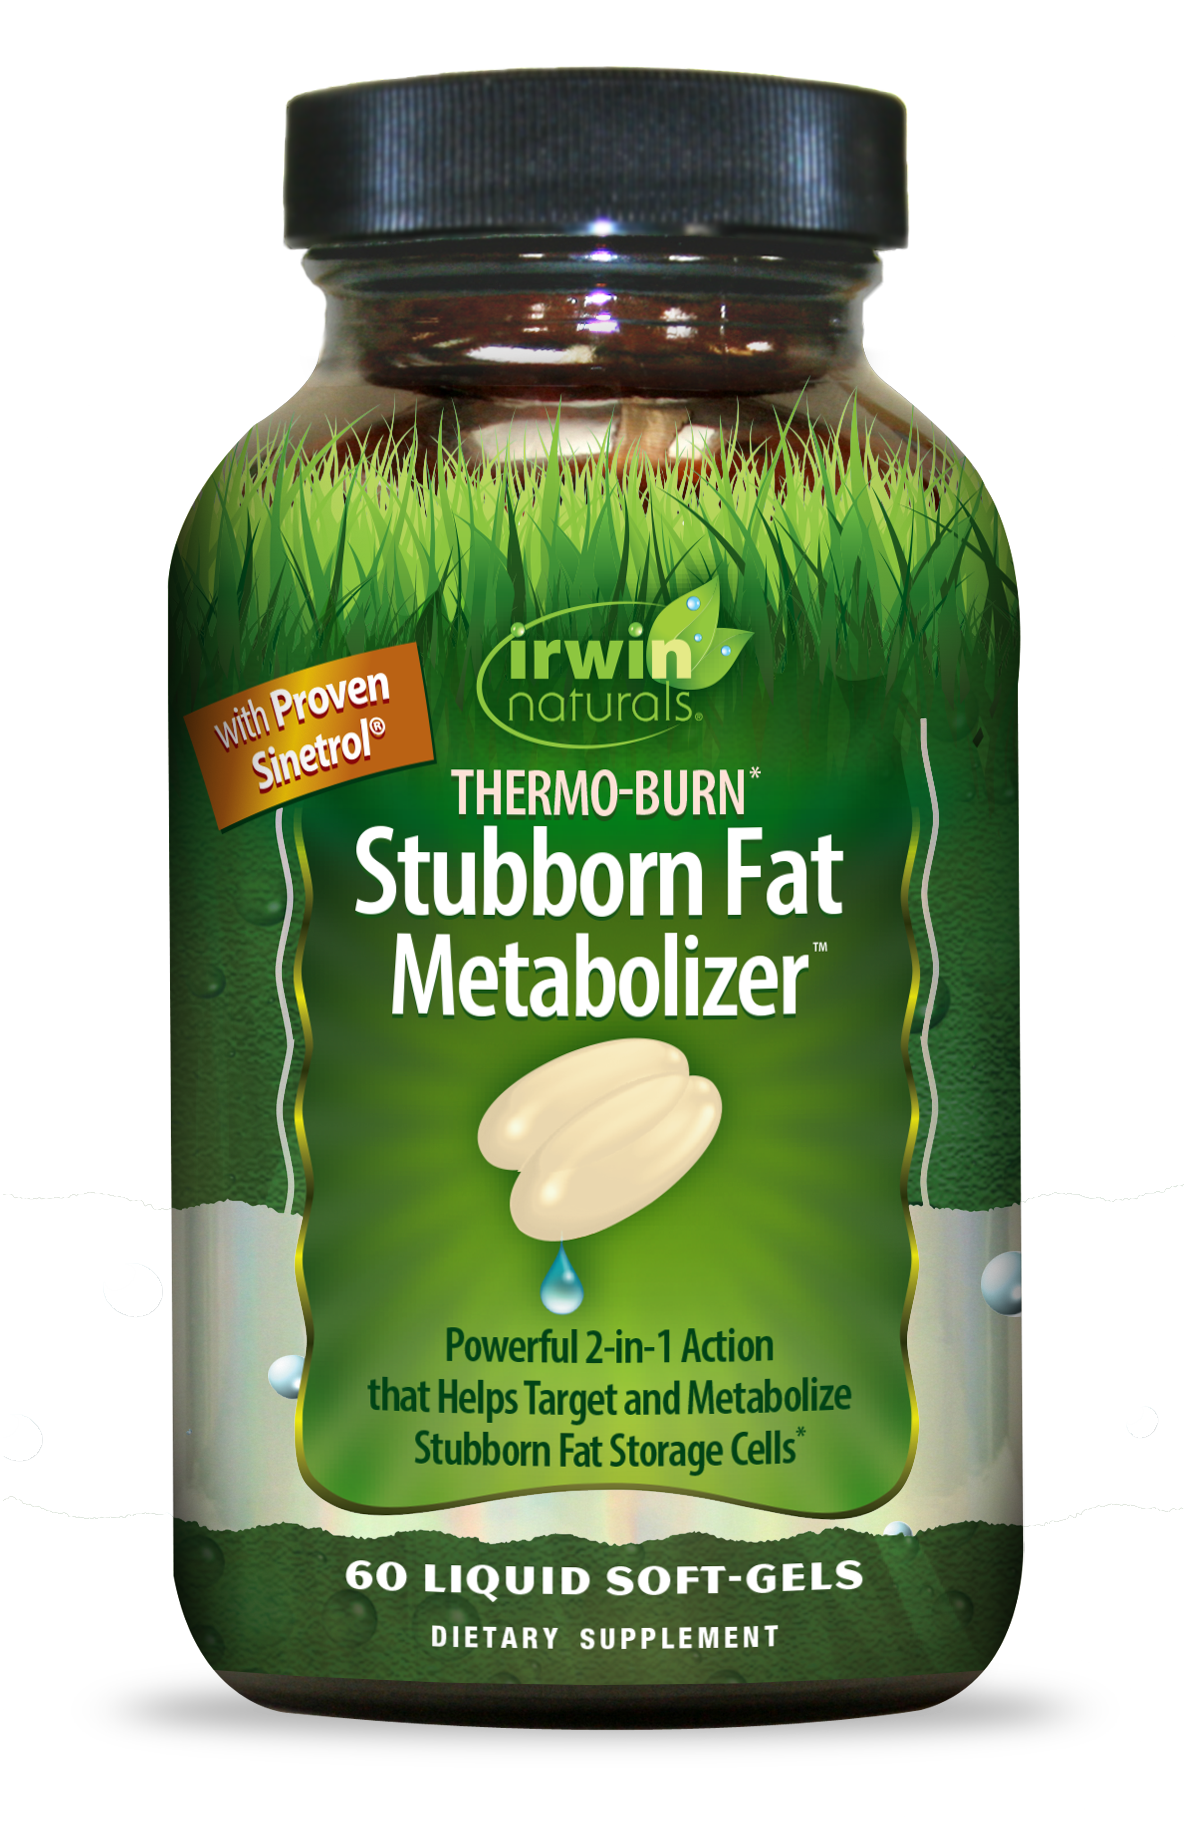 Fat burner for stubborn fat